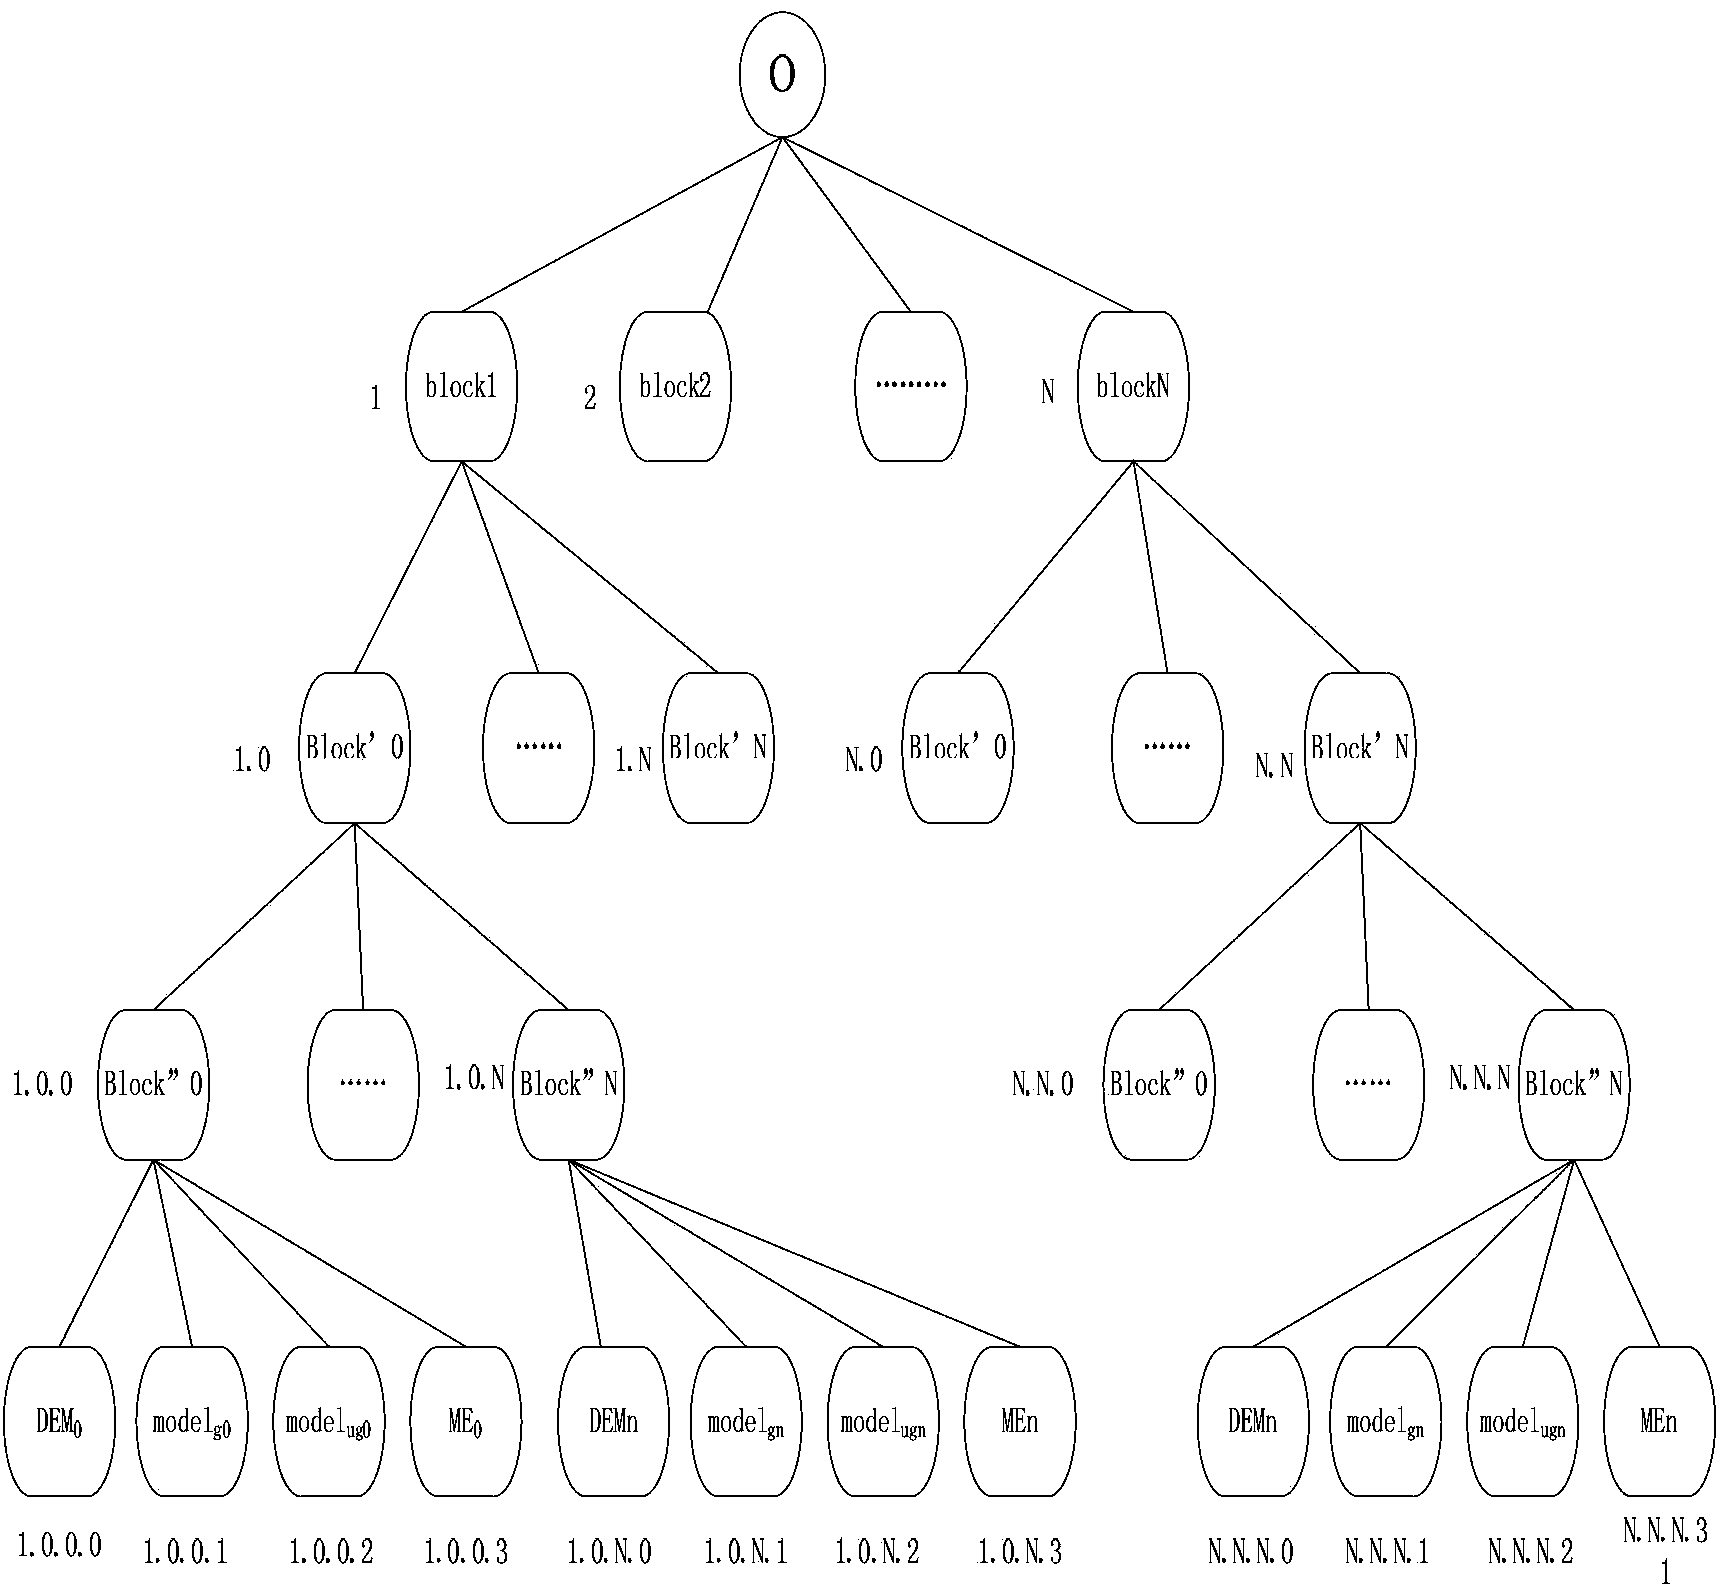 City stereoscopic dynamic scenario generation method based on BRLO-Tree mixed tree structure